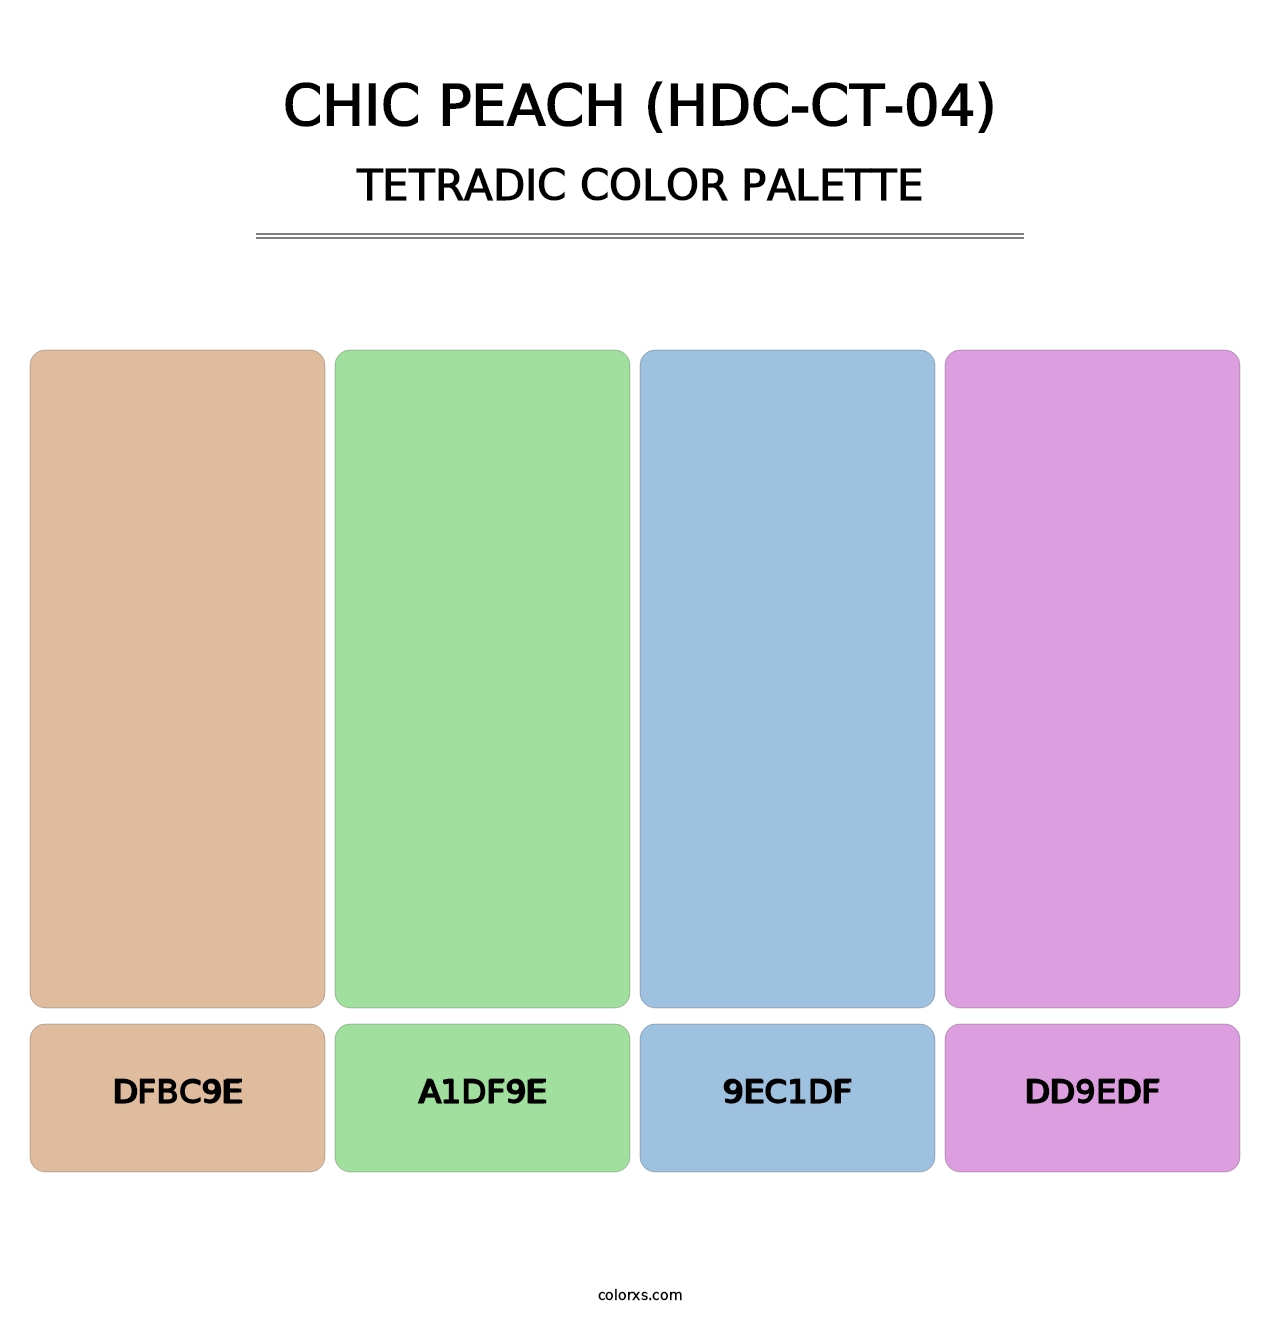 Chic Peach (HDC-CT-04) - Tetradic Color Palette